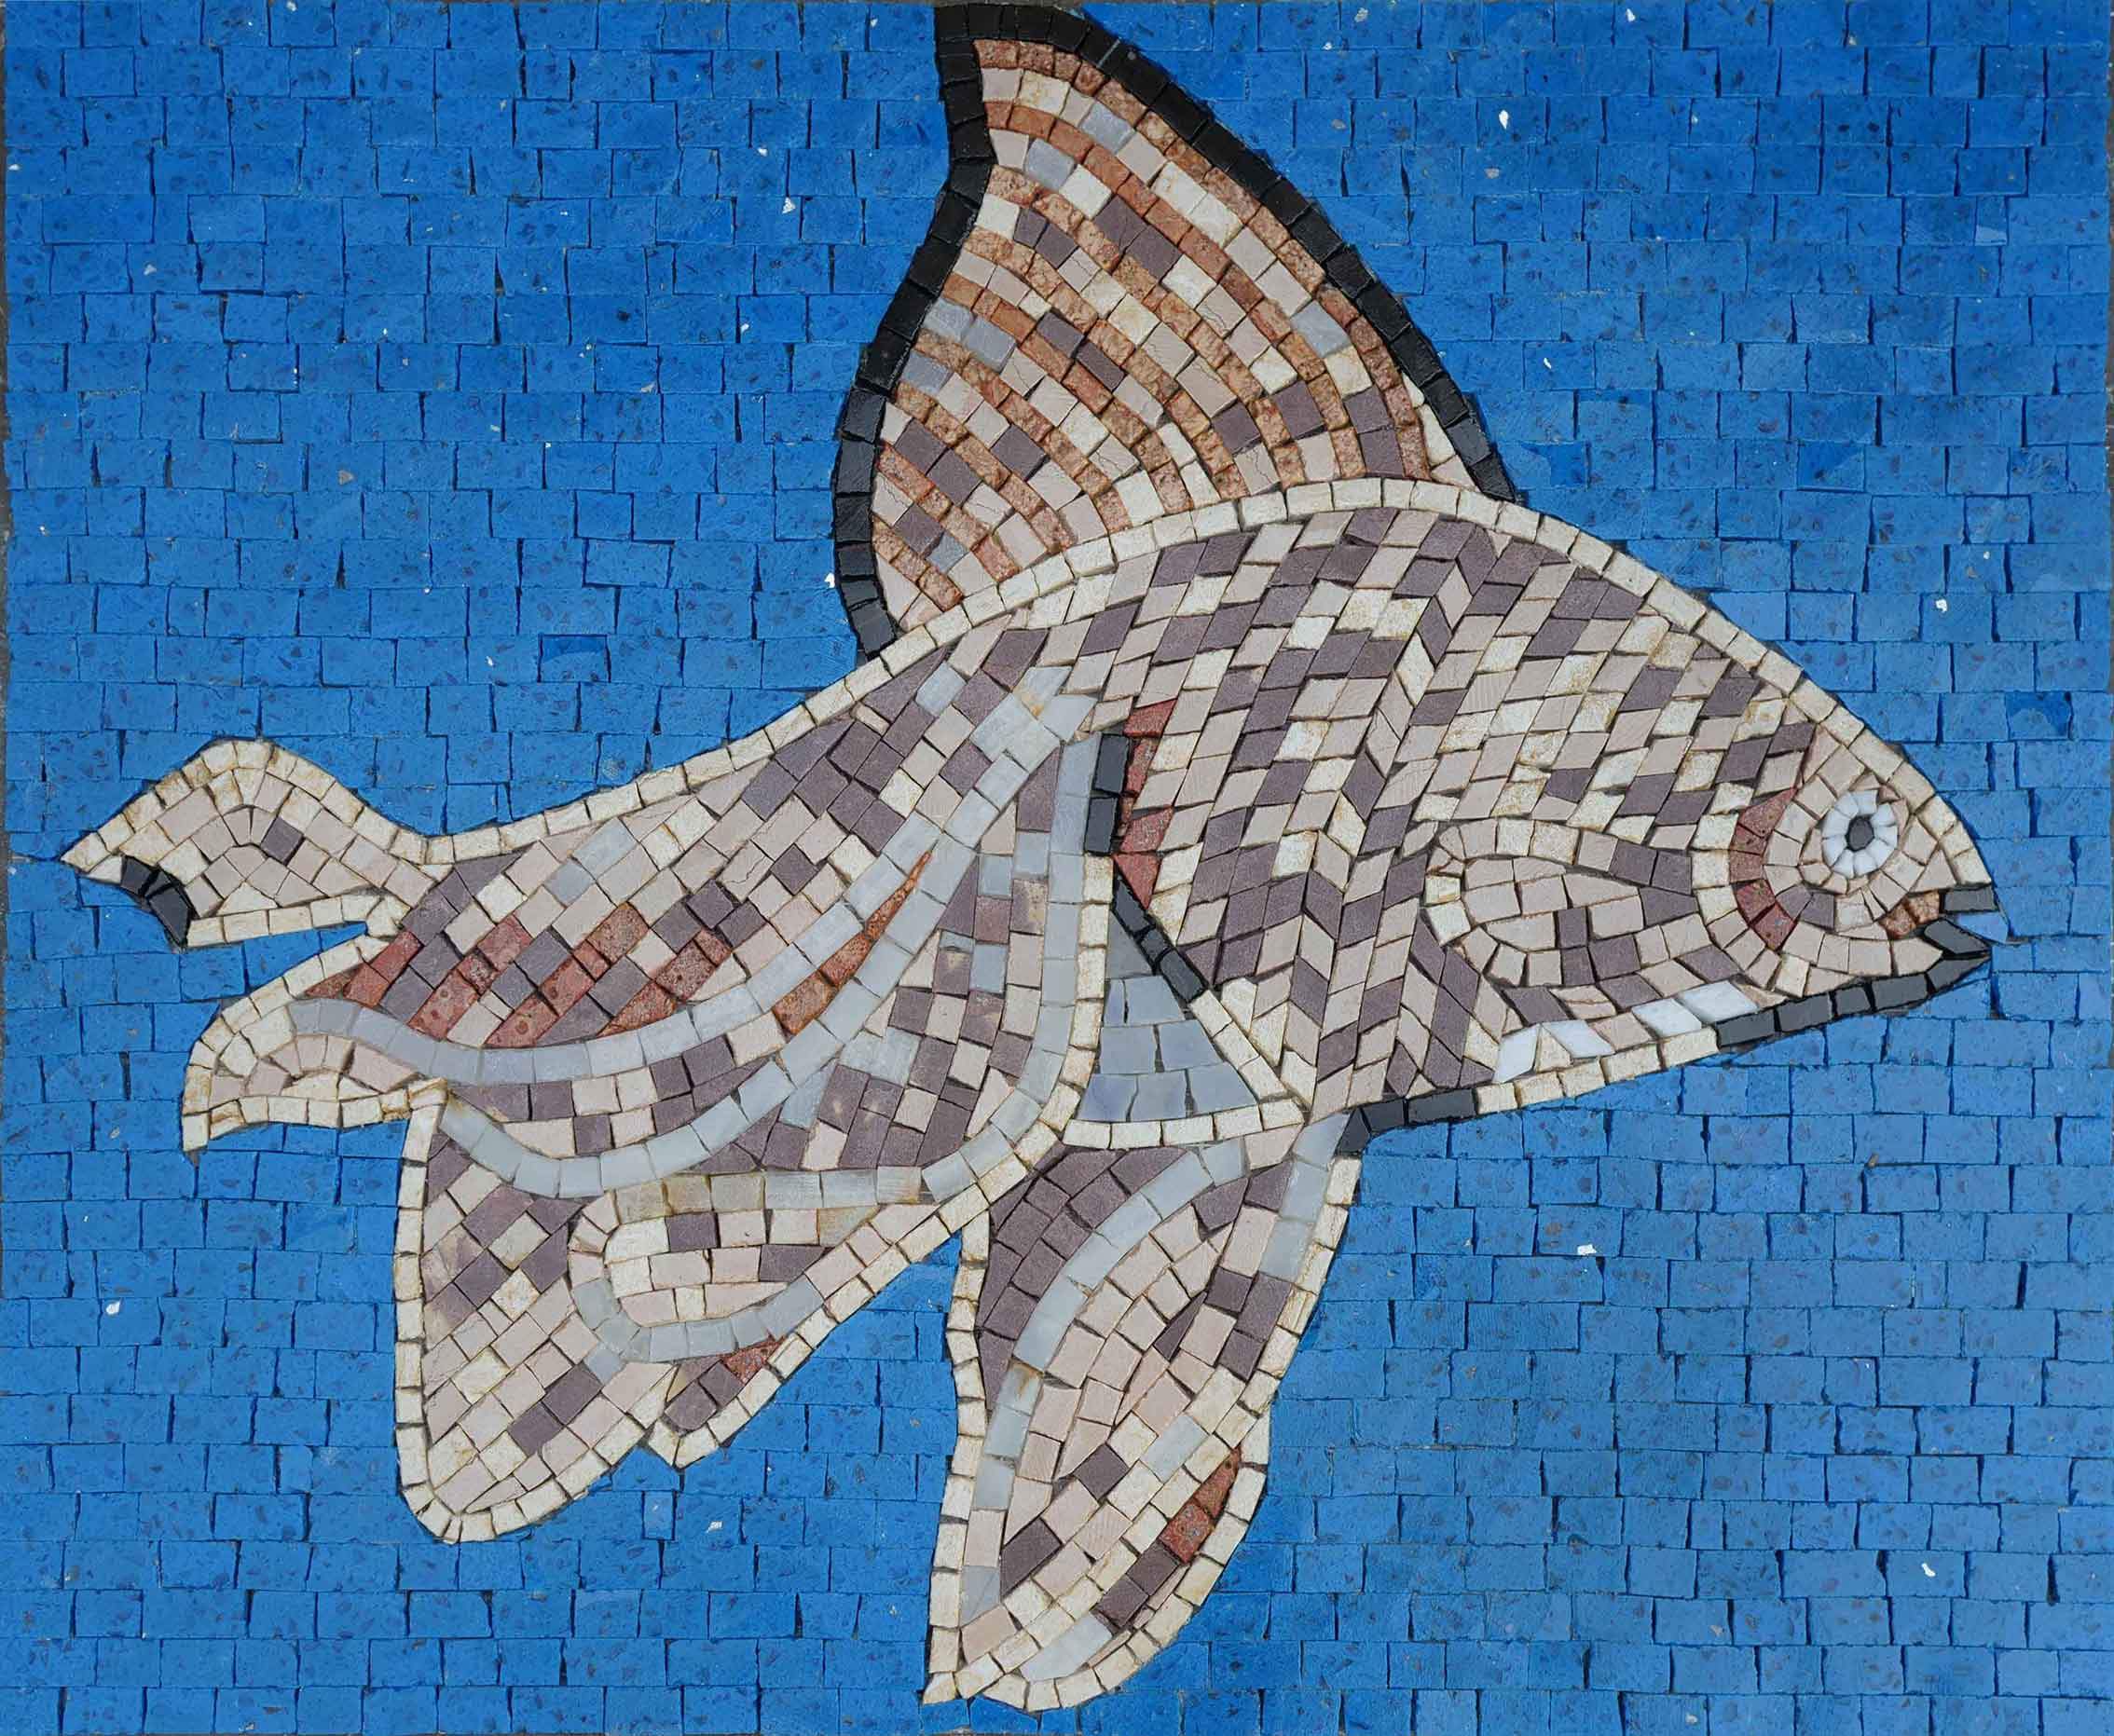 Winged Fish - Mosaic Design - Wall Art